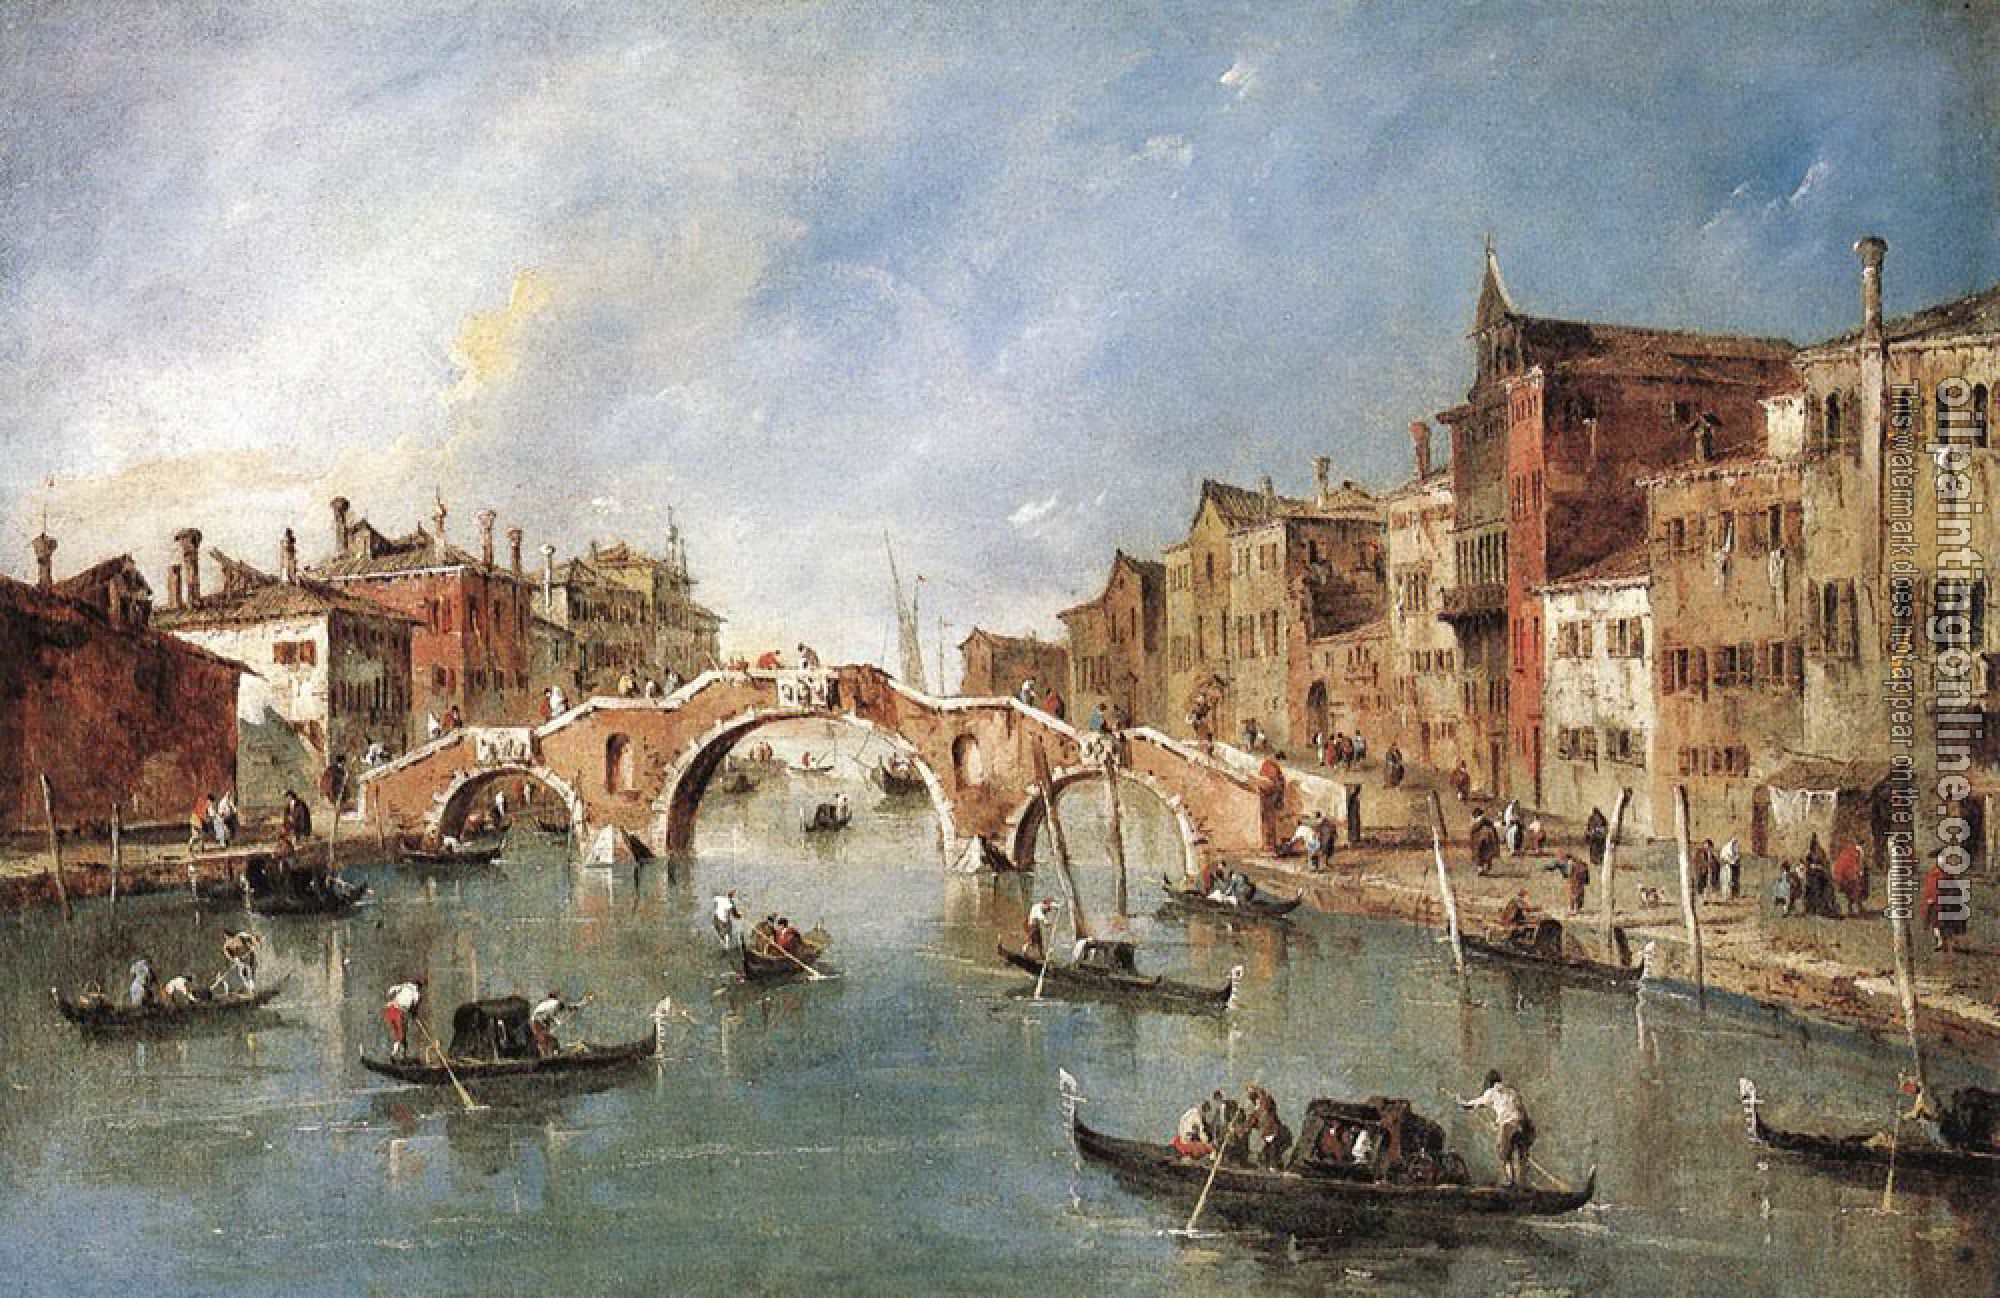 Francesco Guardi - The Three Arched Bridge at Cannaregio